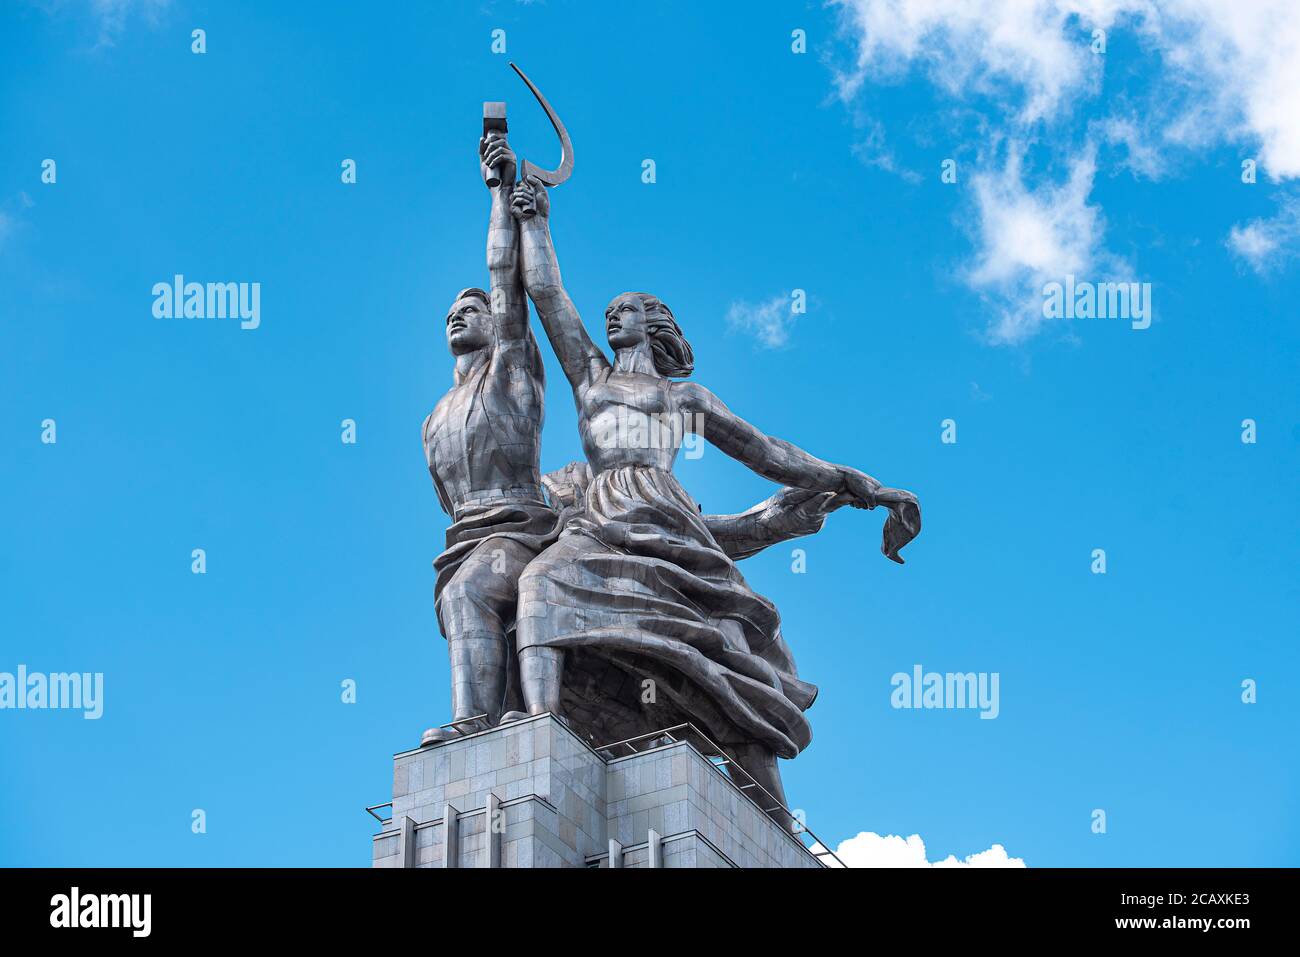 Denkmalarbeiter und Kolchosfrau oder Skulptur von Rabotschij i Kolchosnitsa in Moskau in Russland. Stockfoto